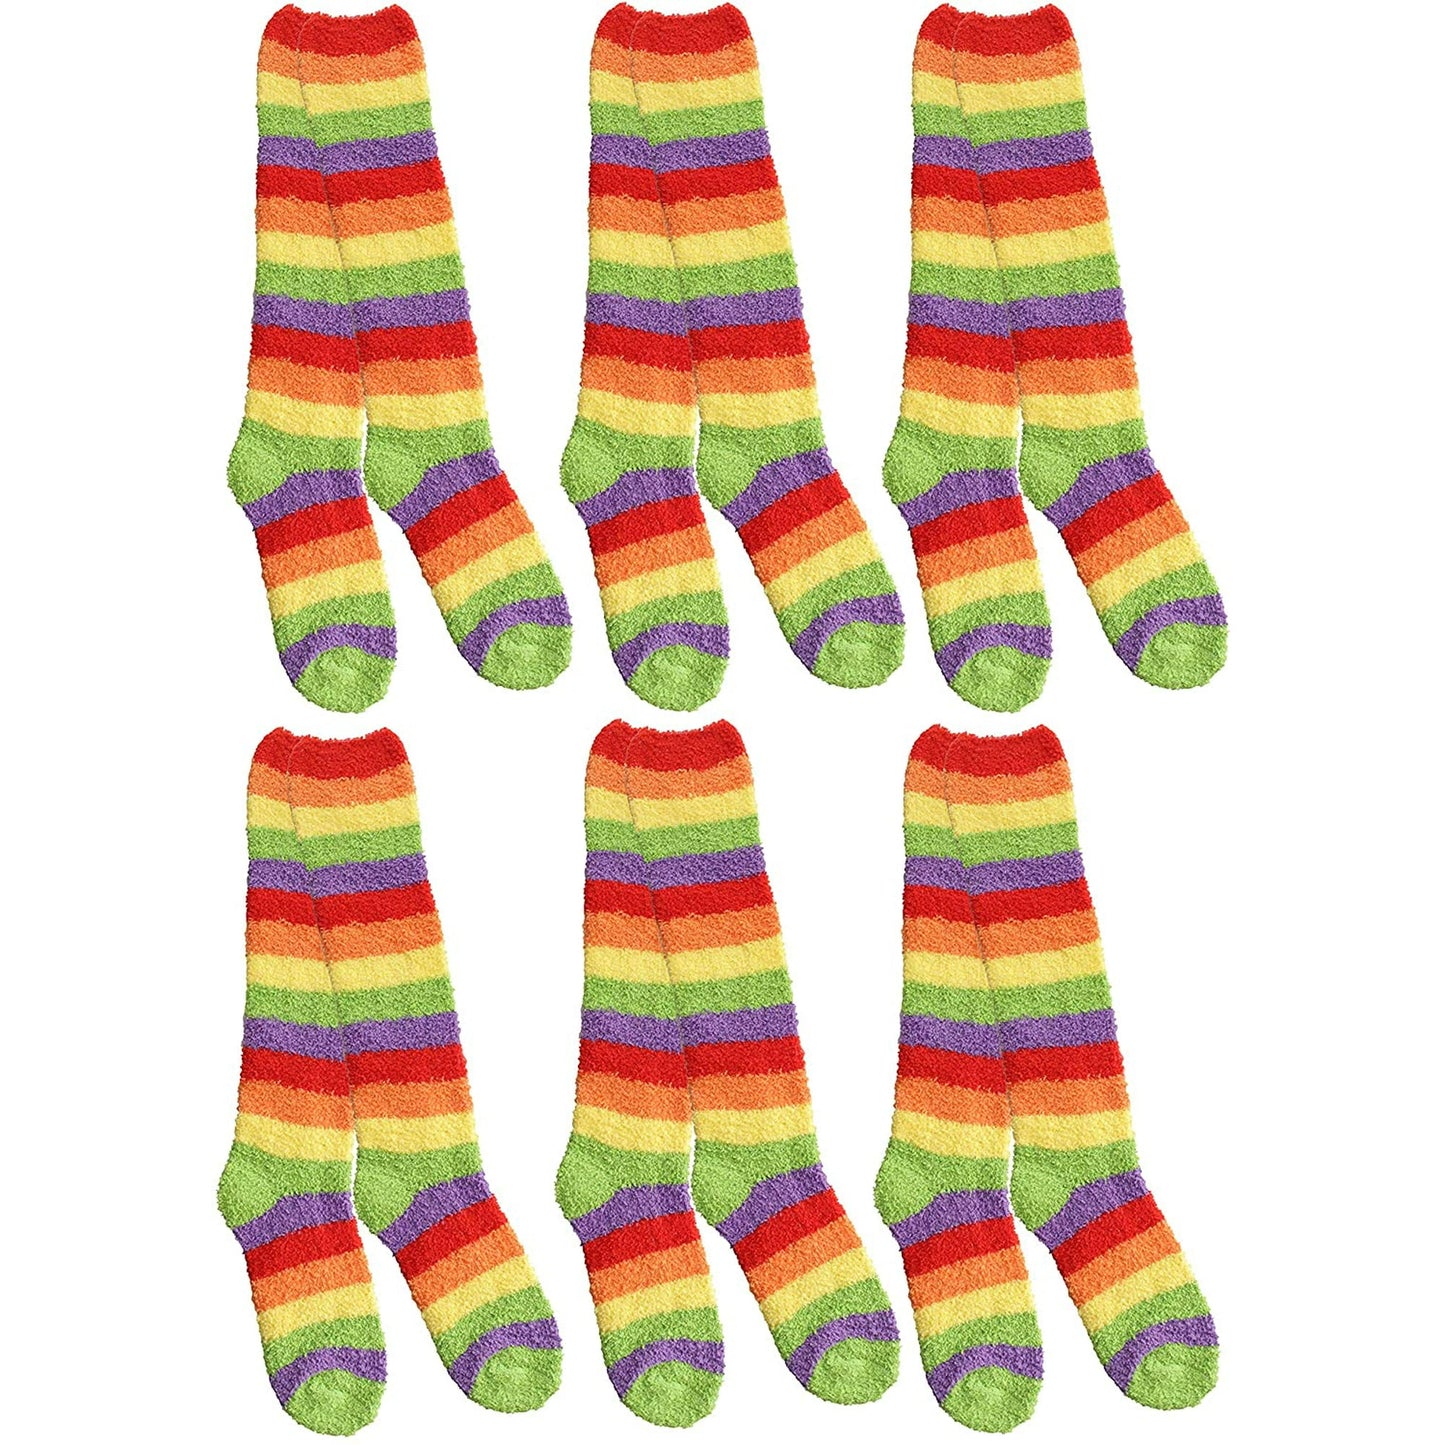 Womens Thick Comfortable Soft Fuzzy Socks Rainbow Stripe Cozy Calf High Winter Plush Socks 6 Pairs Size 9-11